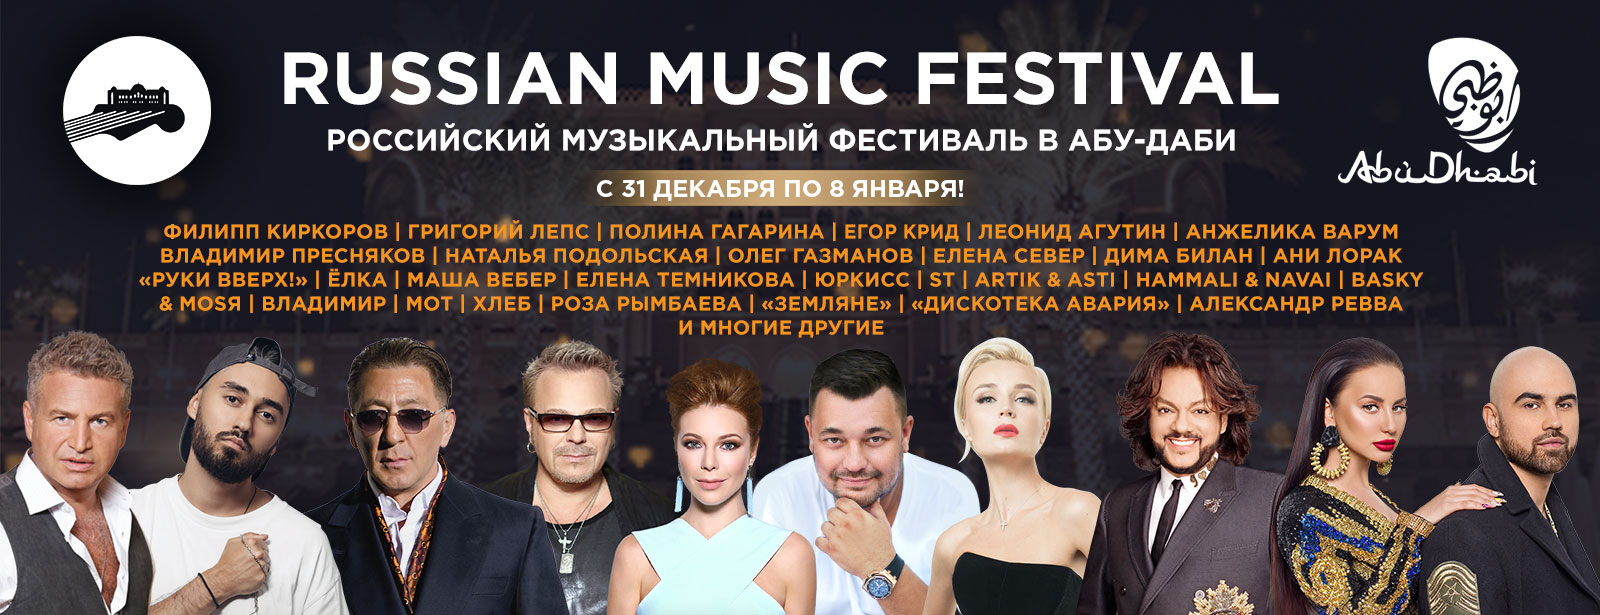 Russian Music Festival 2019 - Coming Soon in UAE